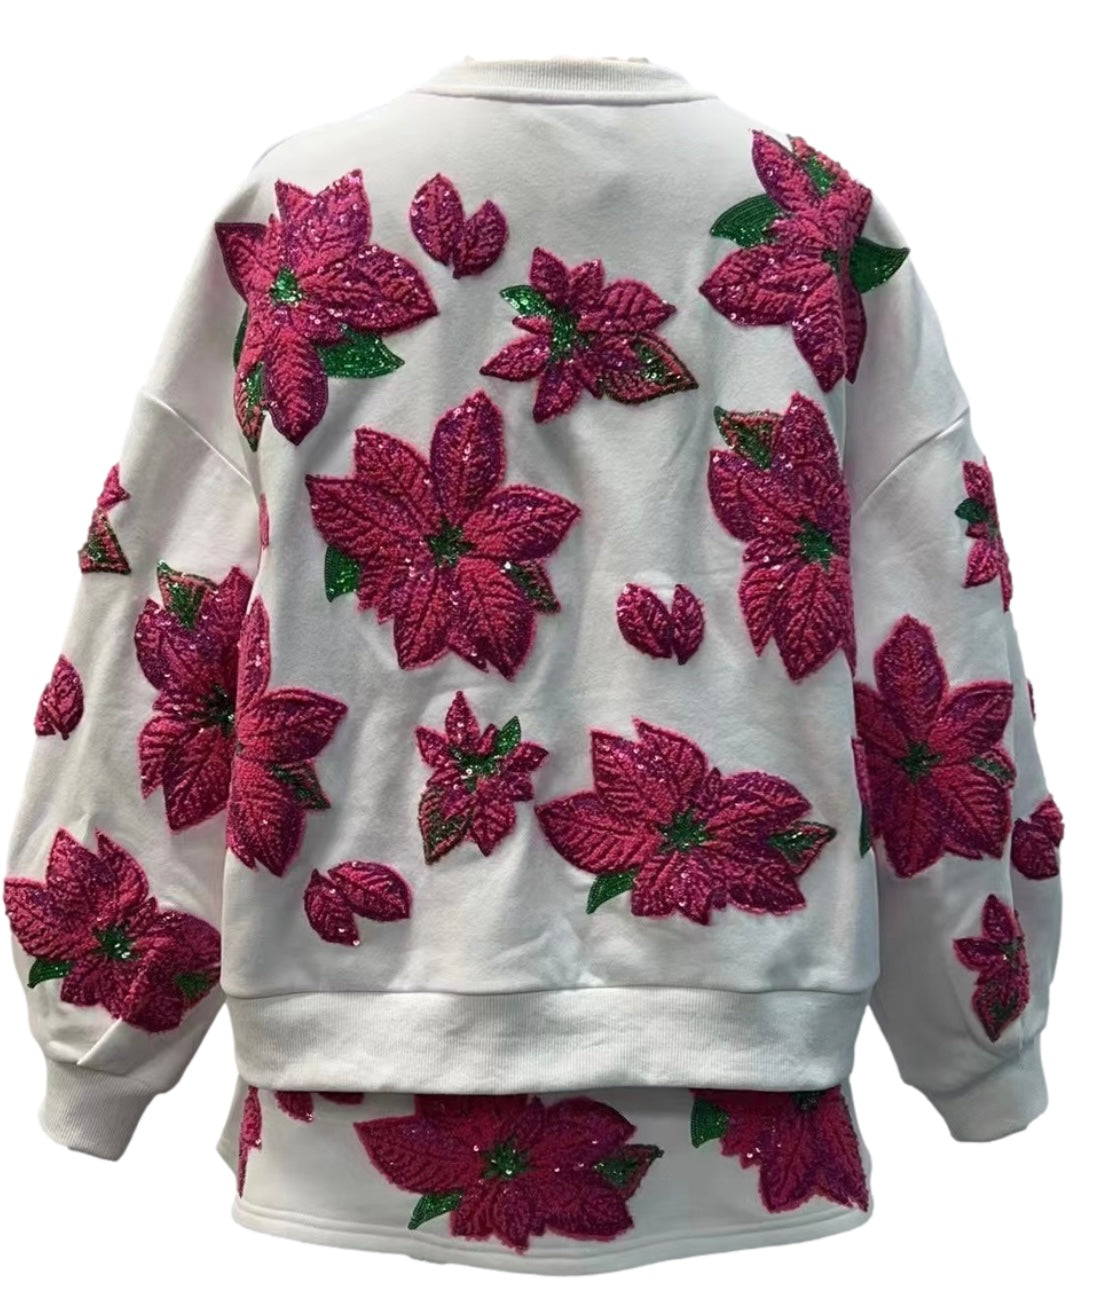 Queen of Sparkles White & Hot Pink Poinsettia Sweatshirt